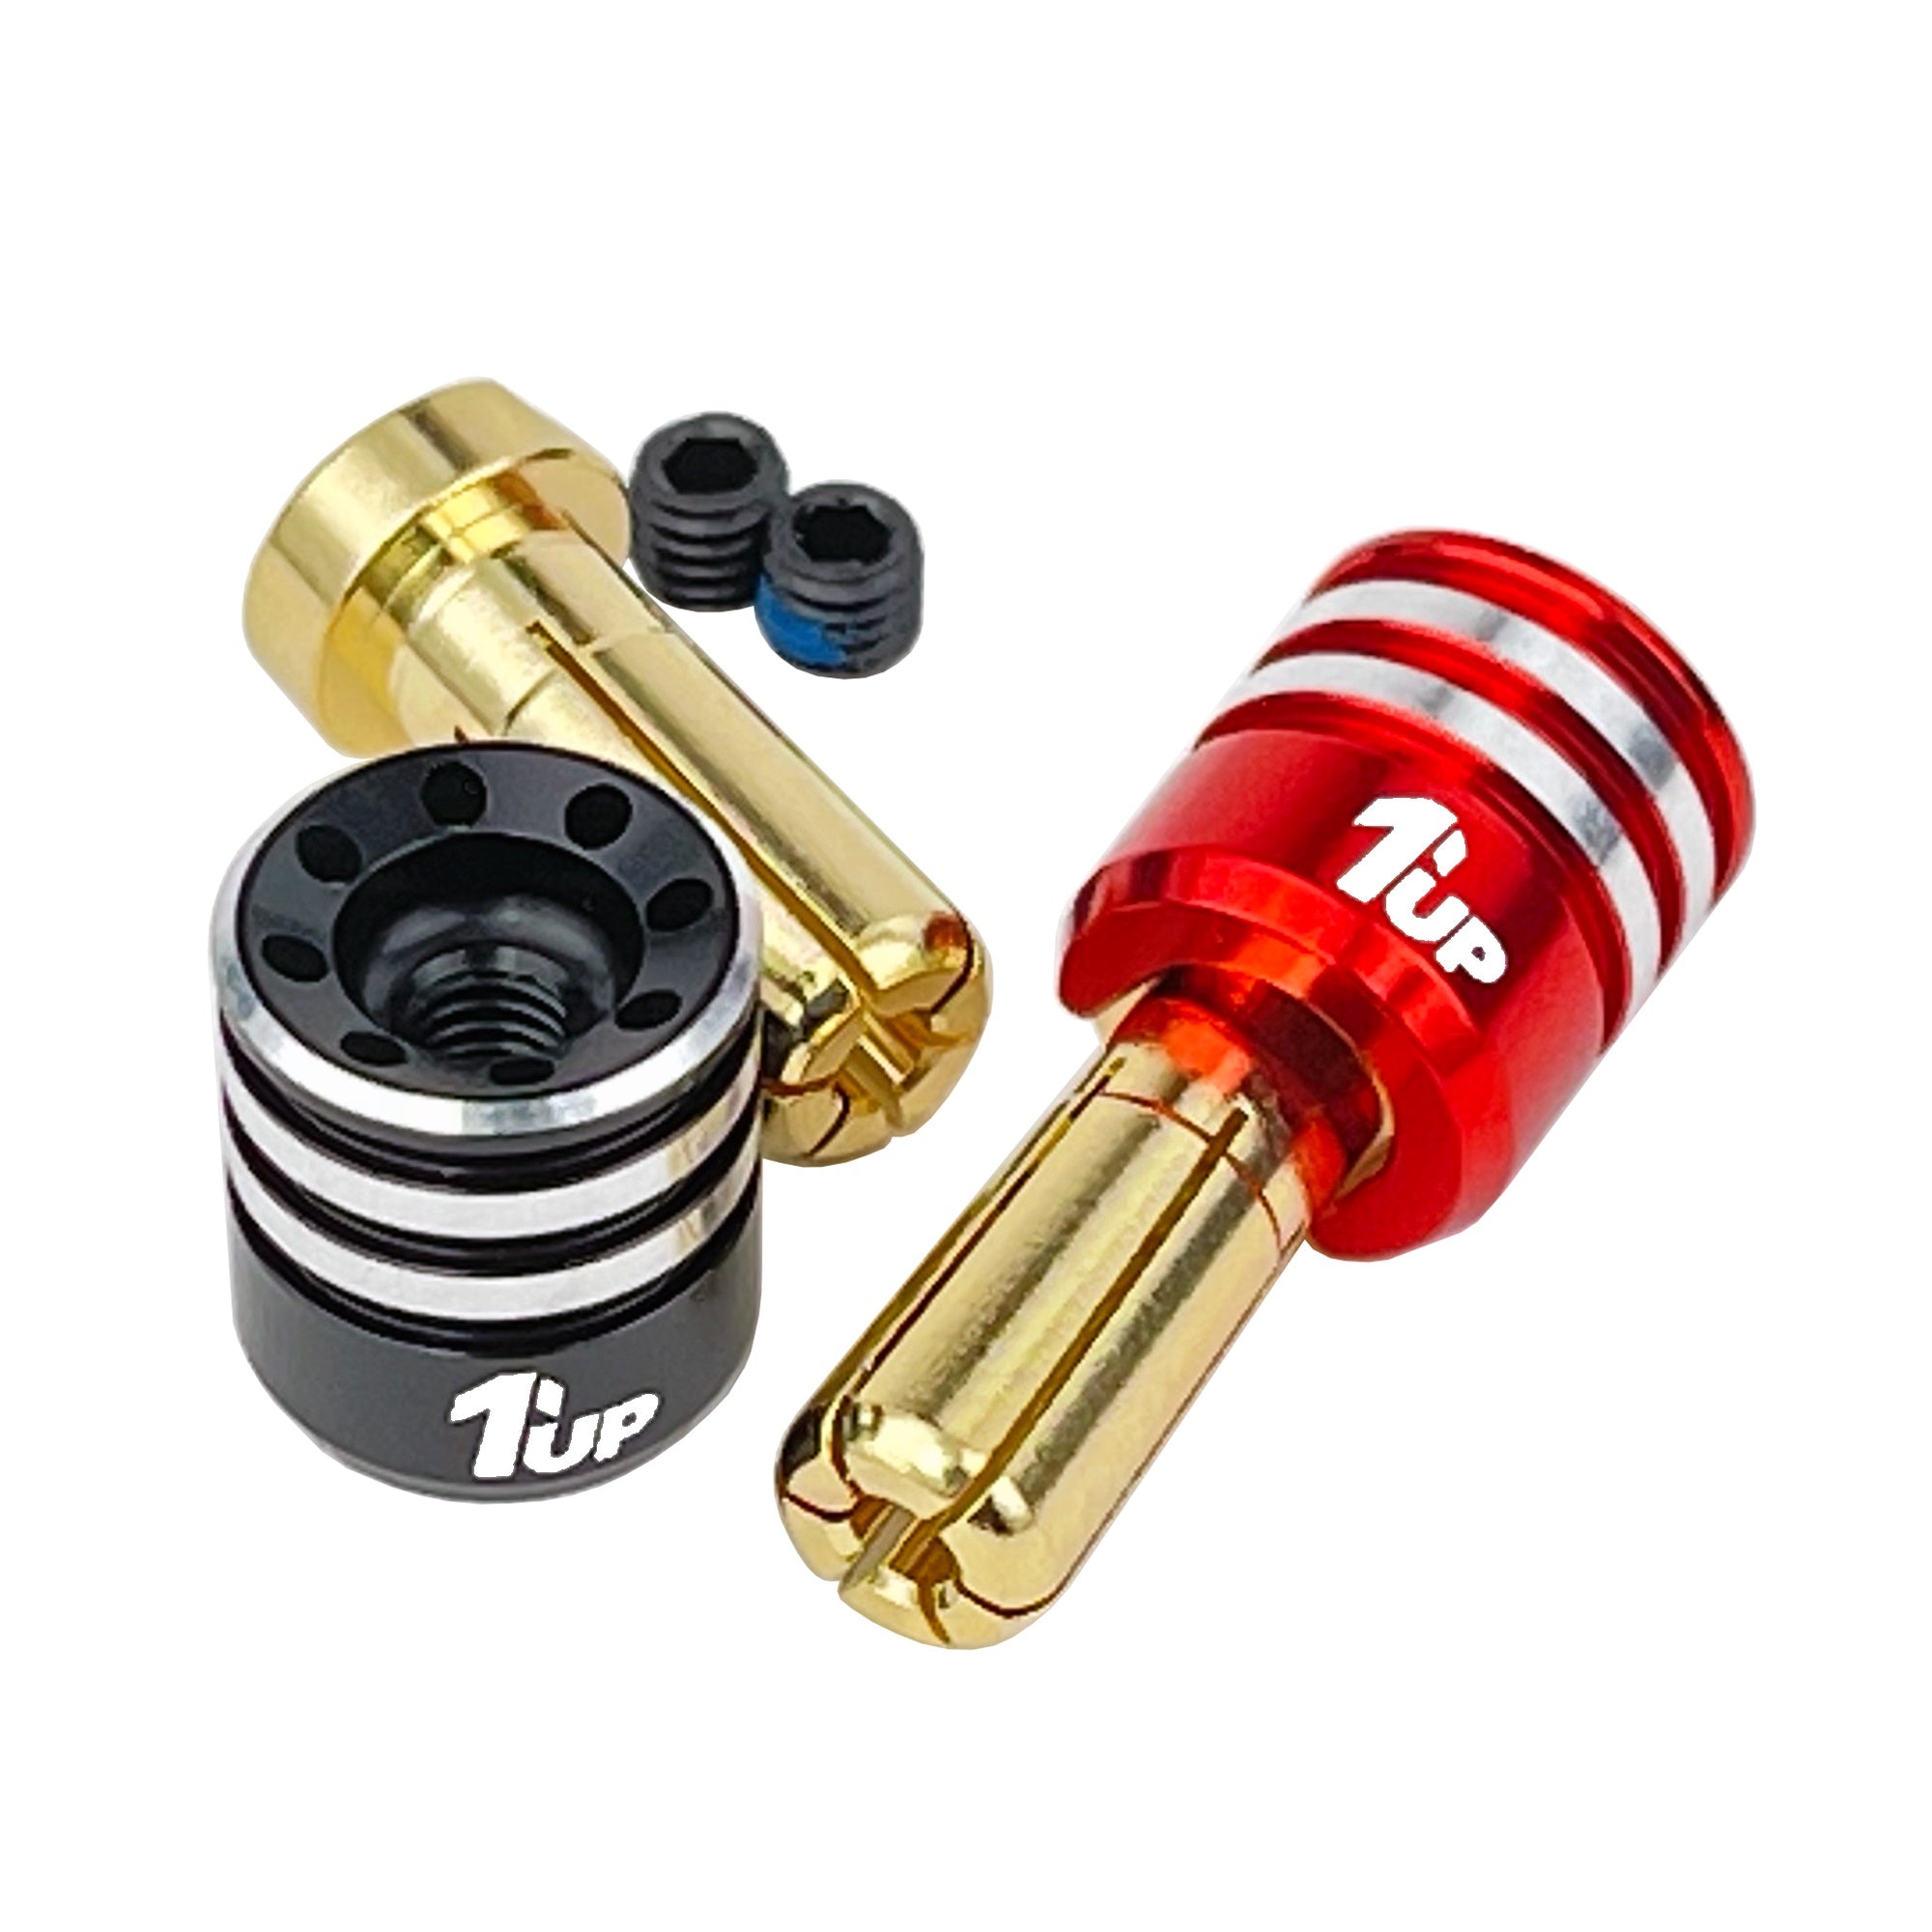 1UP Racing Heatsink Bullet Plug Grips w/5mm Bullets (Black/Red) - 1UP190436